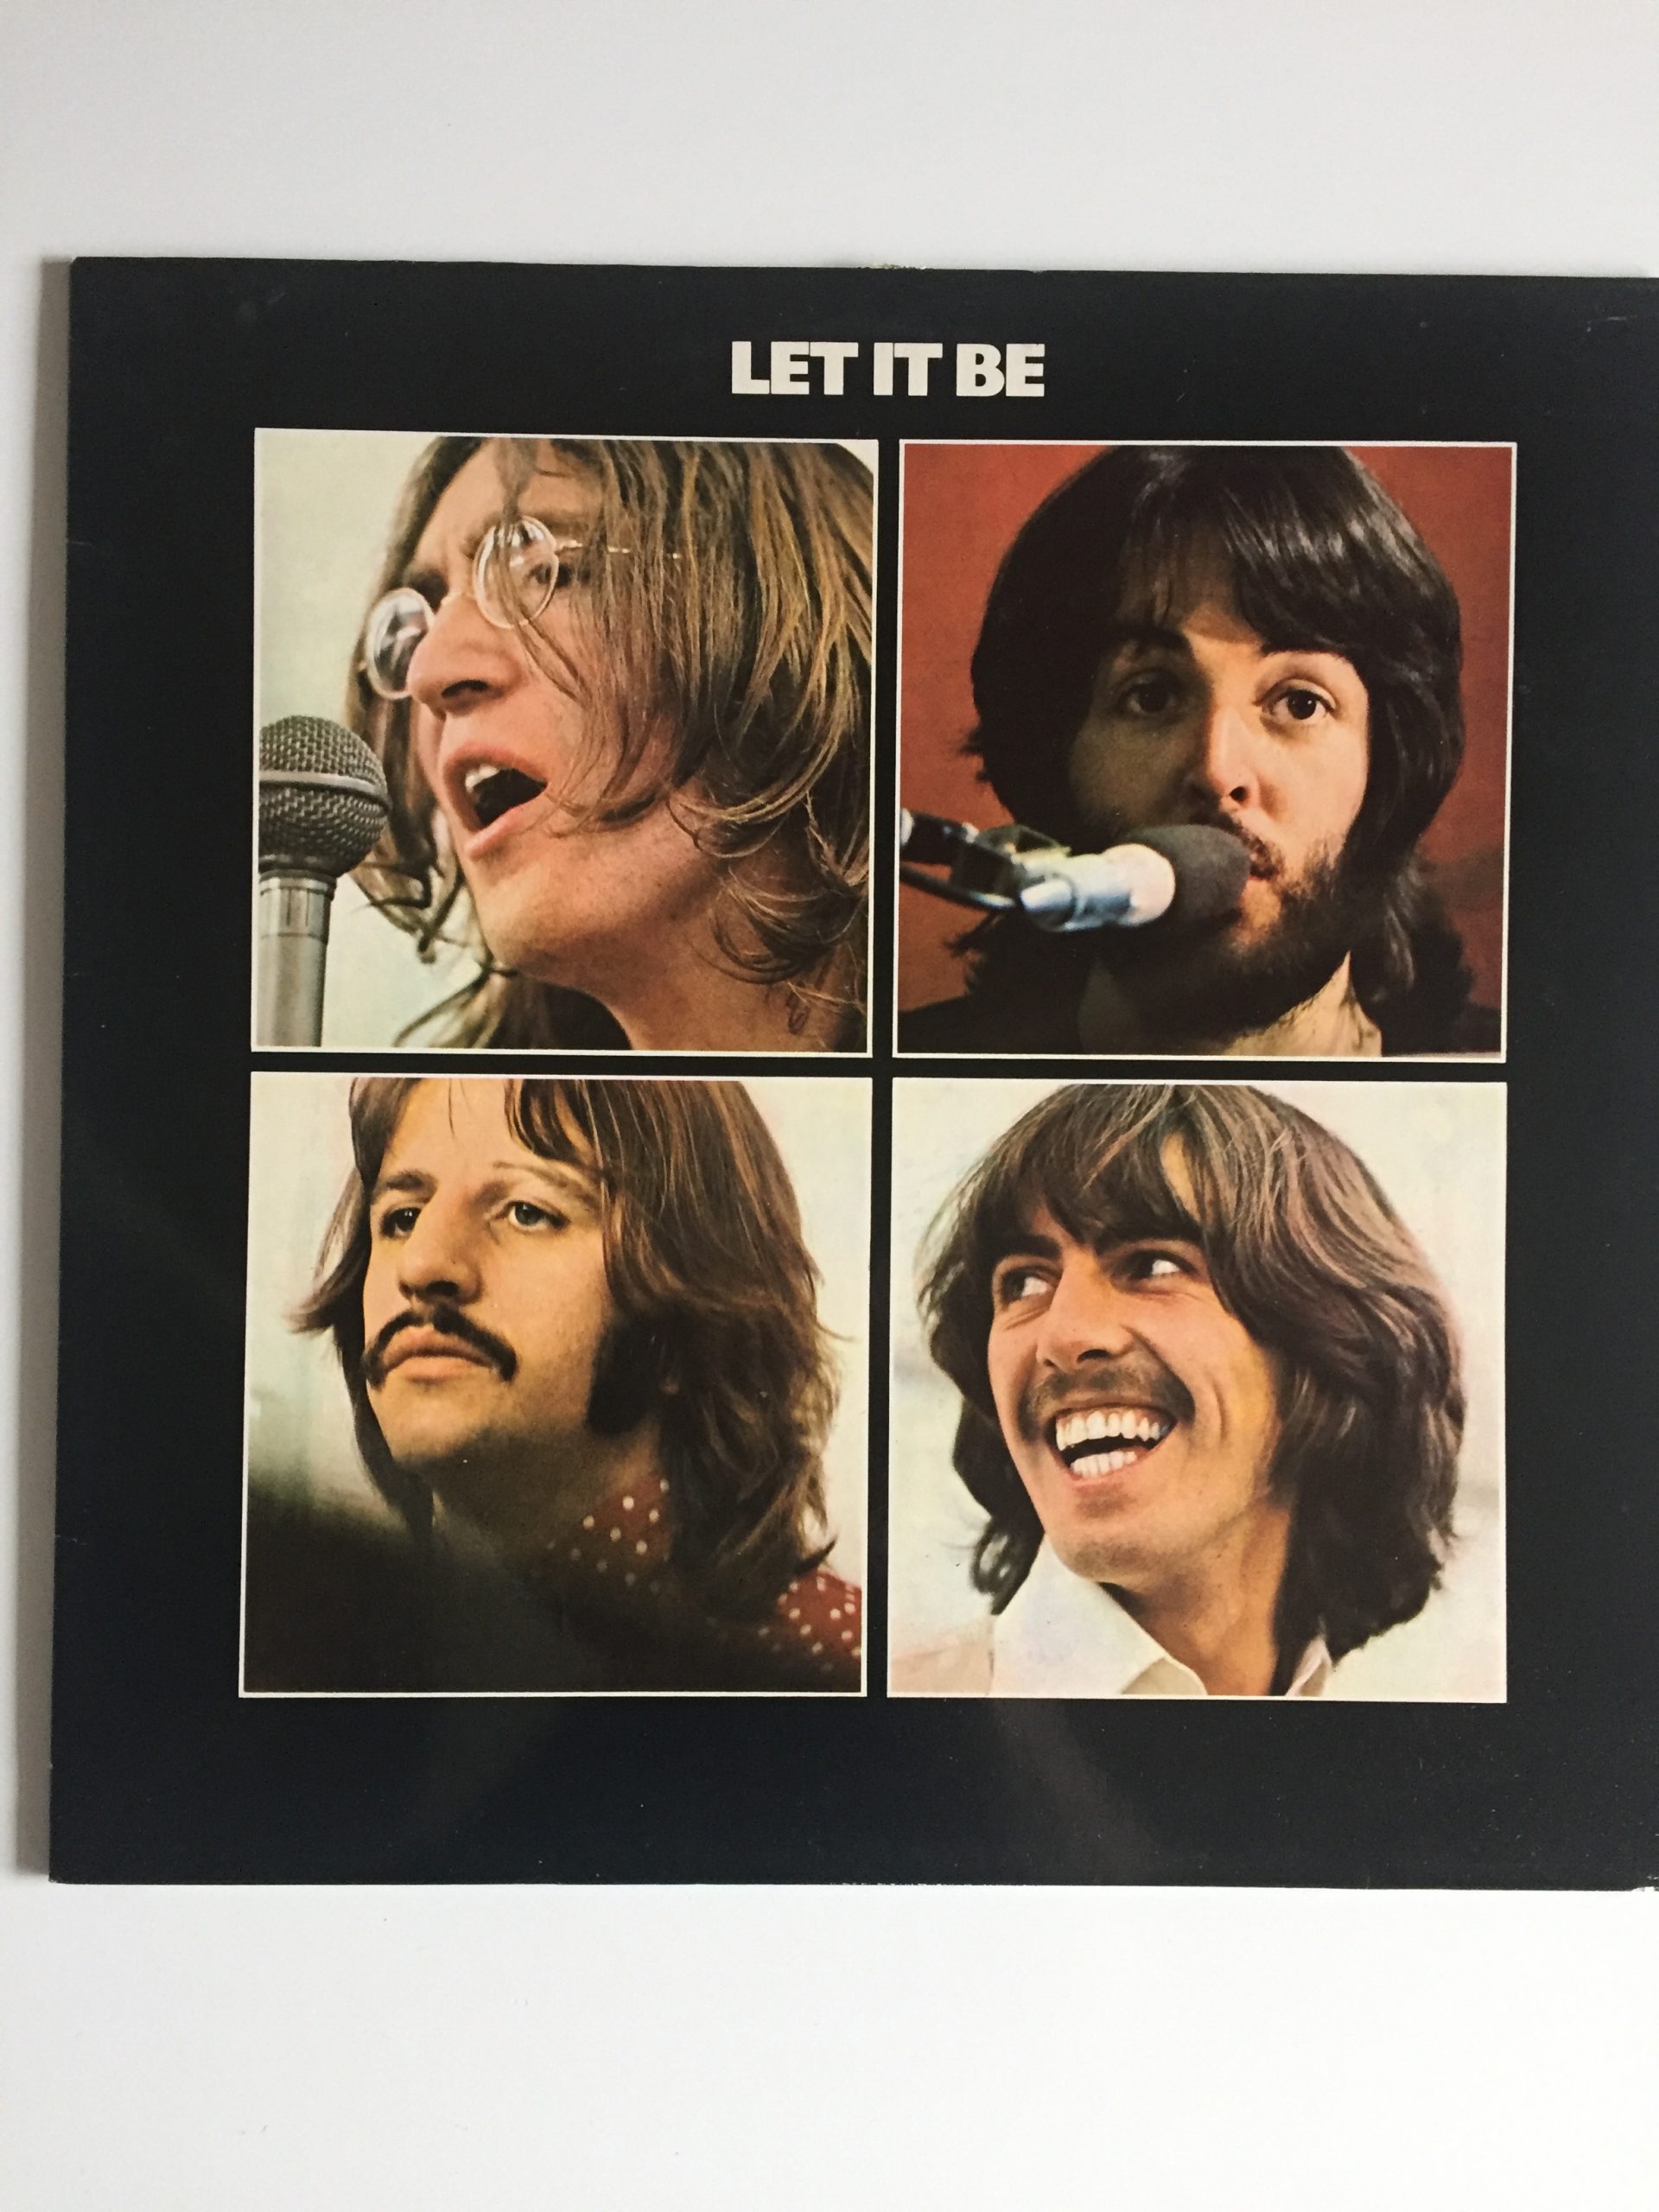 Песня лет ит би. Обложка альбома Битлз Let it be. The Beatles Let it be 1970. John Lennon Let it be 1970. LP Beatles, the: Let it be.